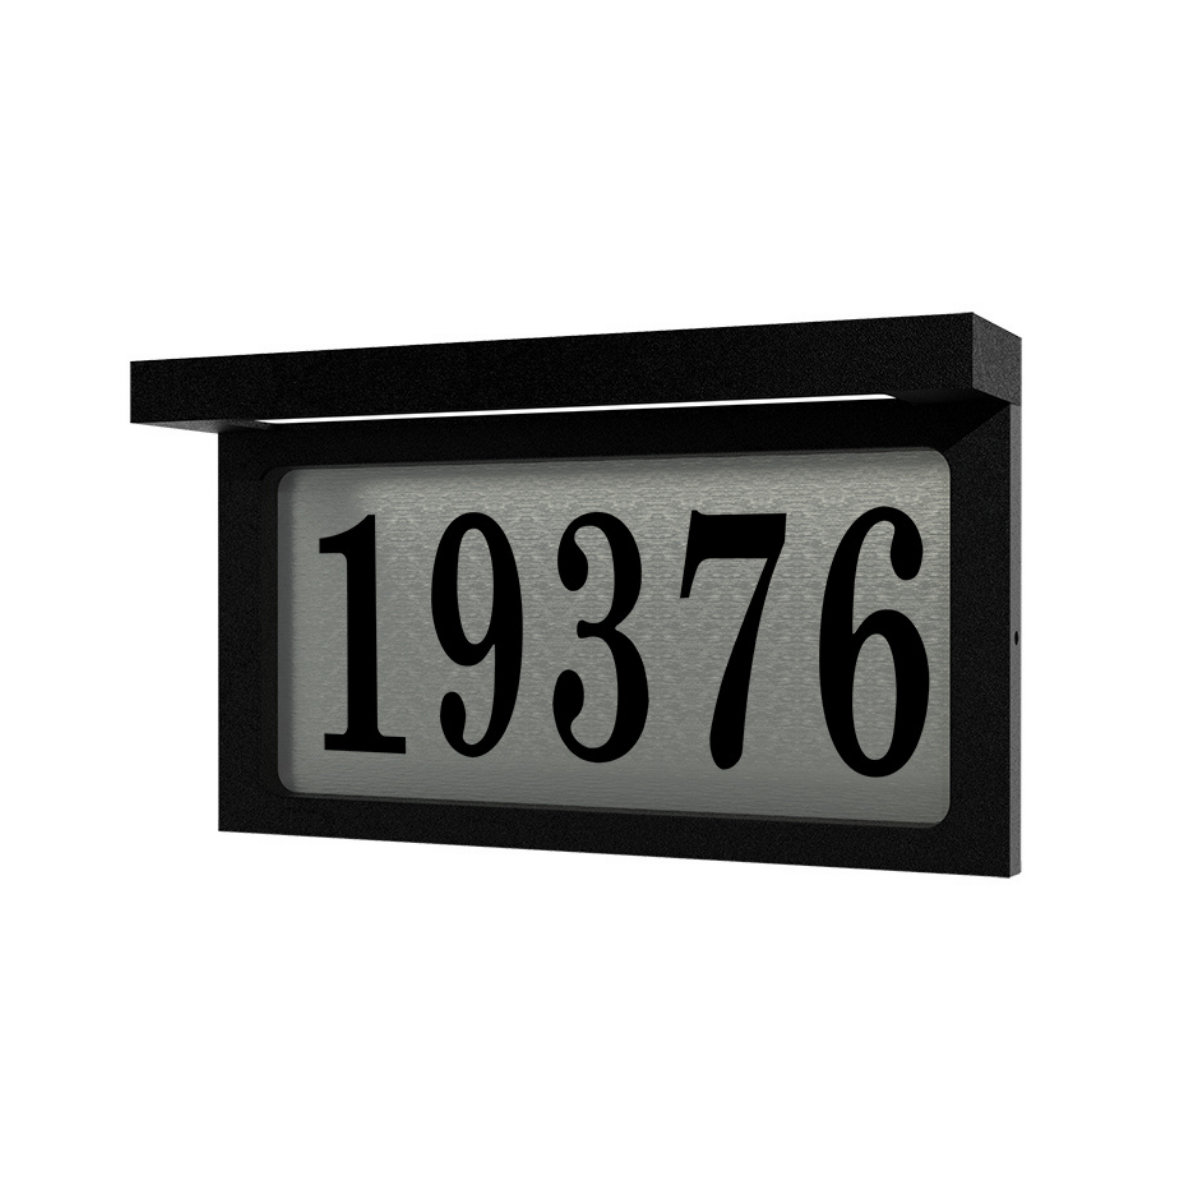 Tampa - Illuminated horizontal stainless steel address plaque - 1718